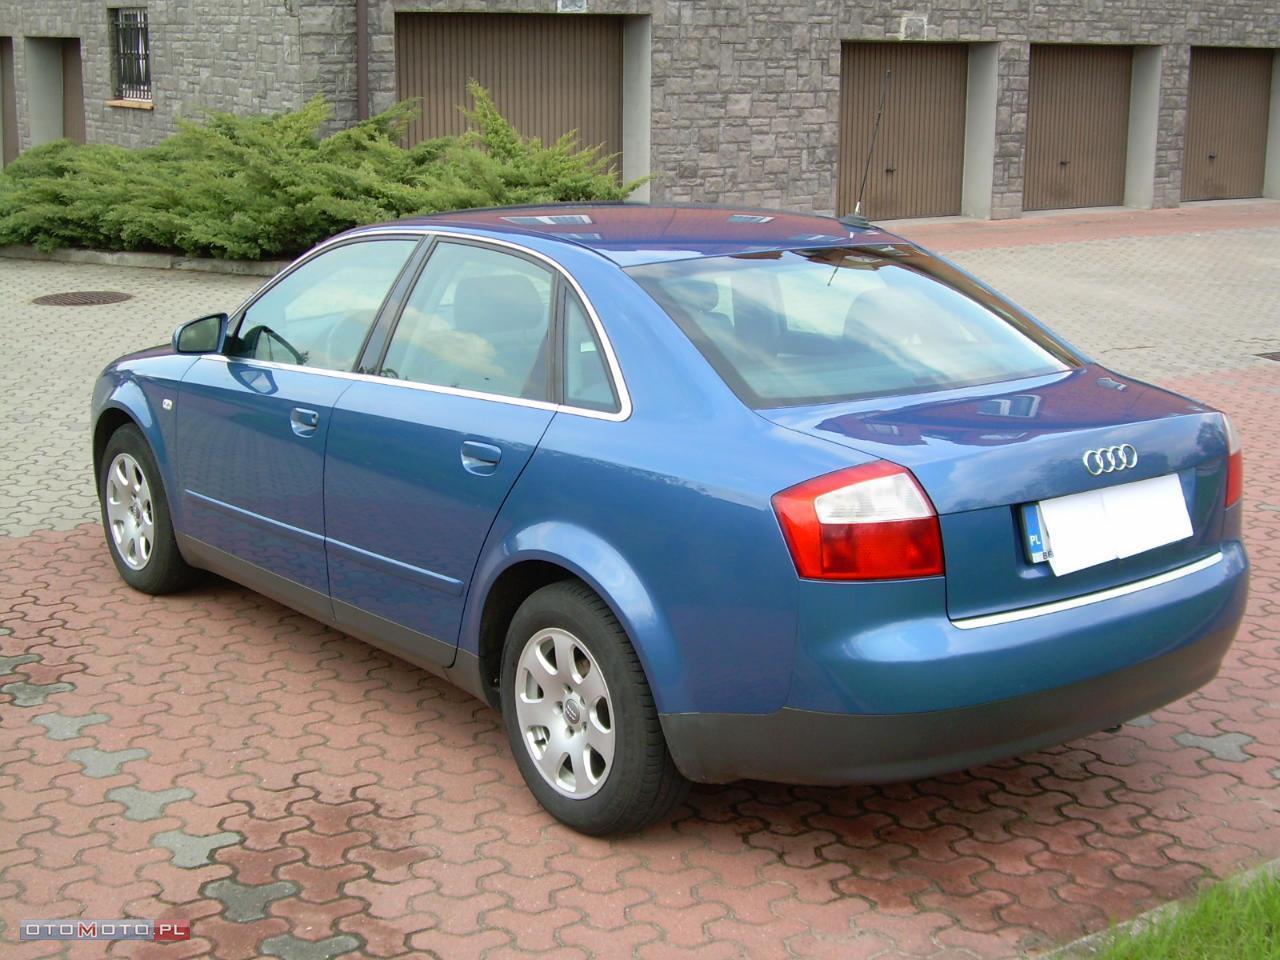 Audi A4 grudzień 2002 r.